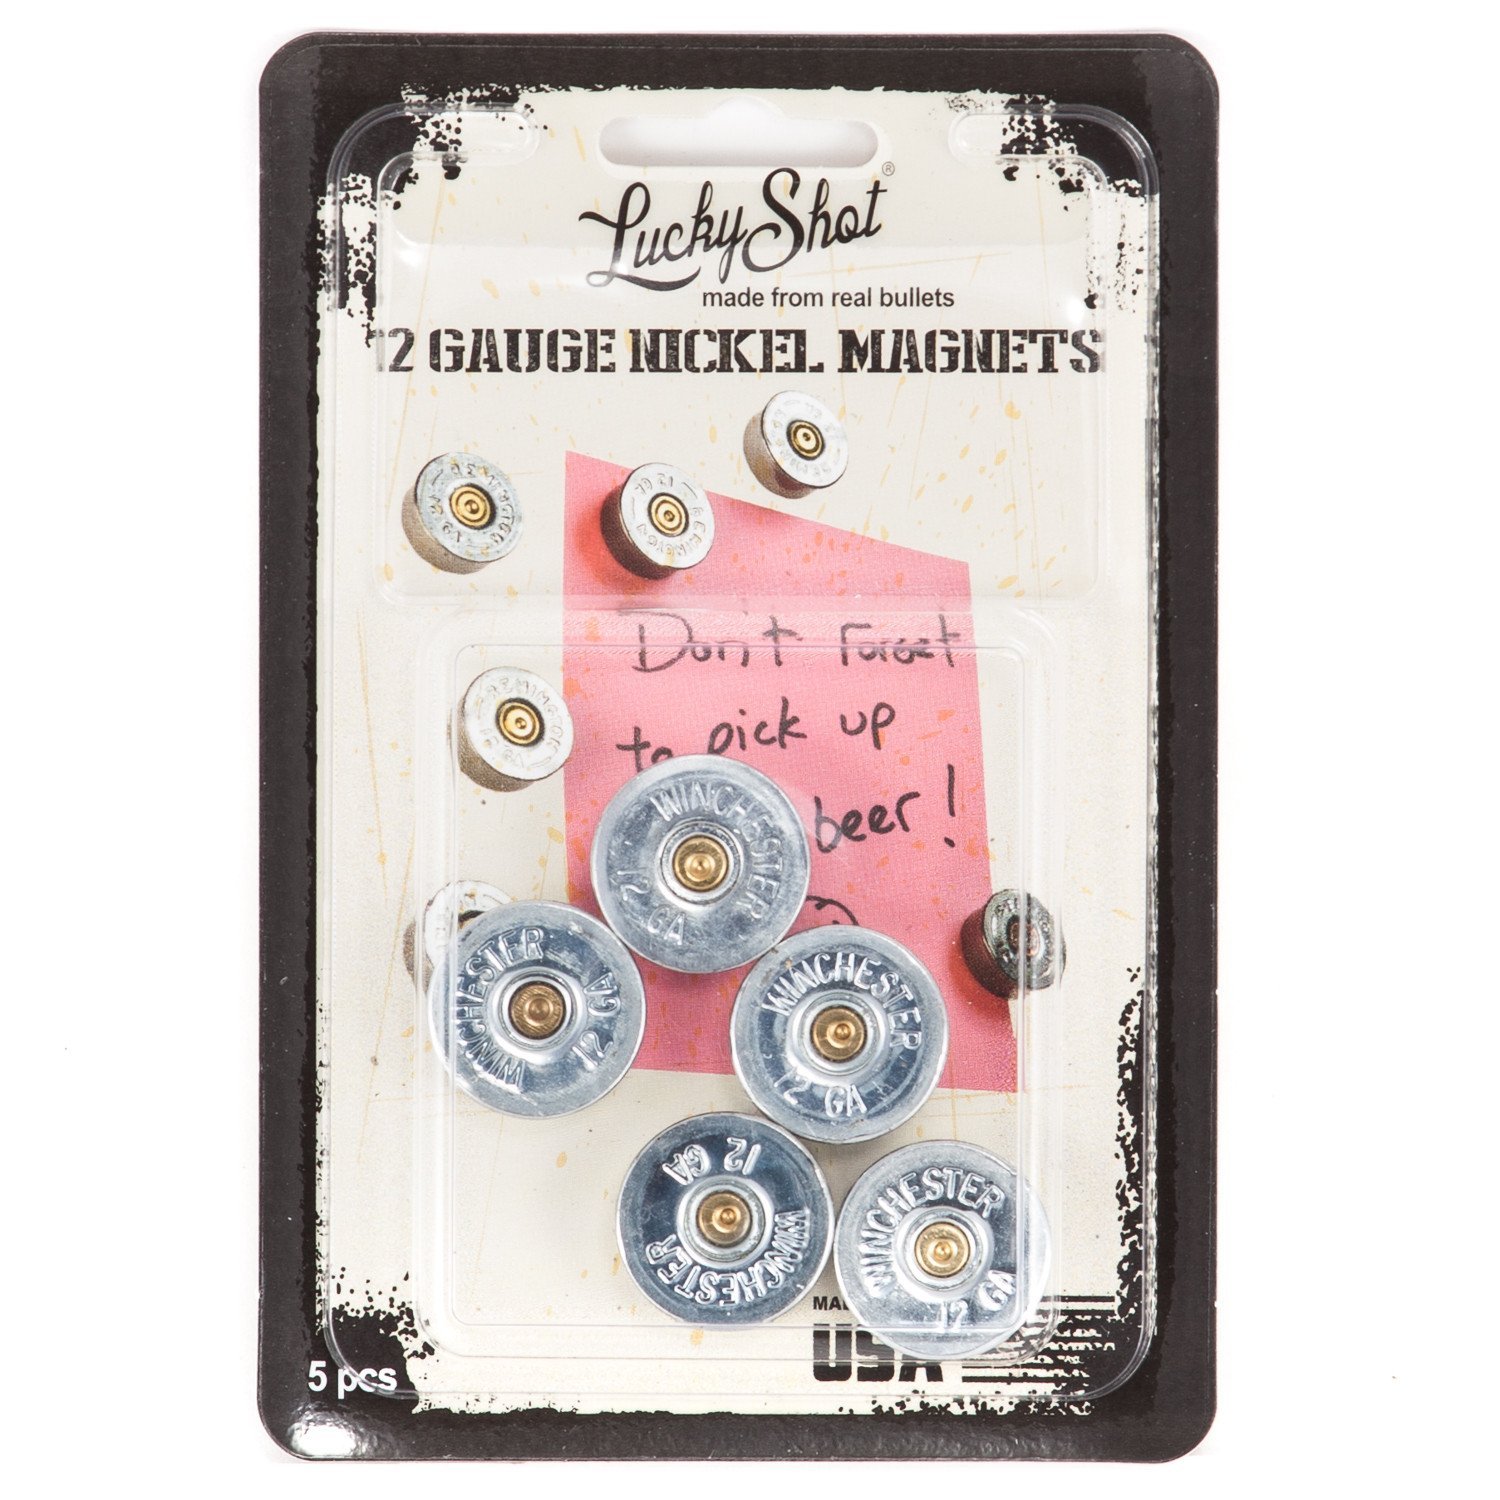 LUCKY SHOT 12 Gauge Bullet Magnets - (5pcs)